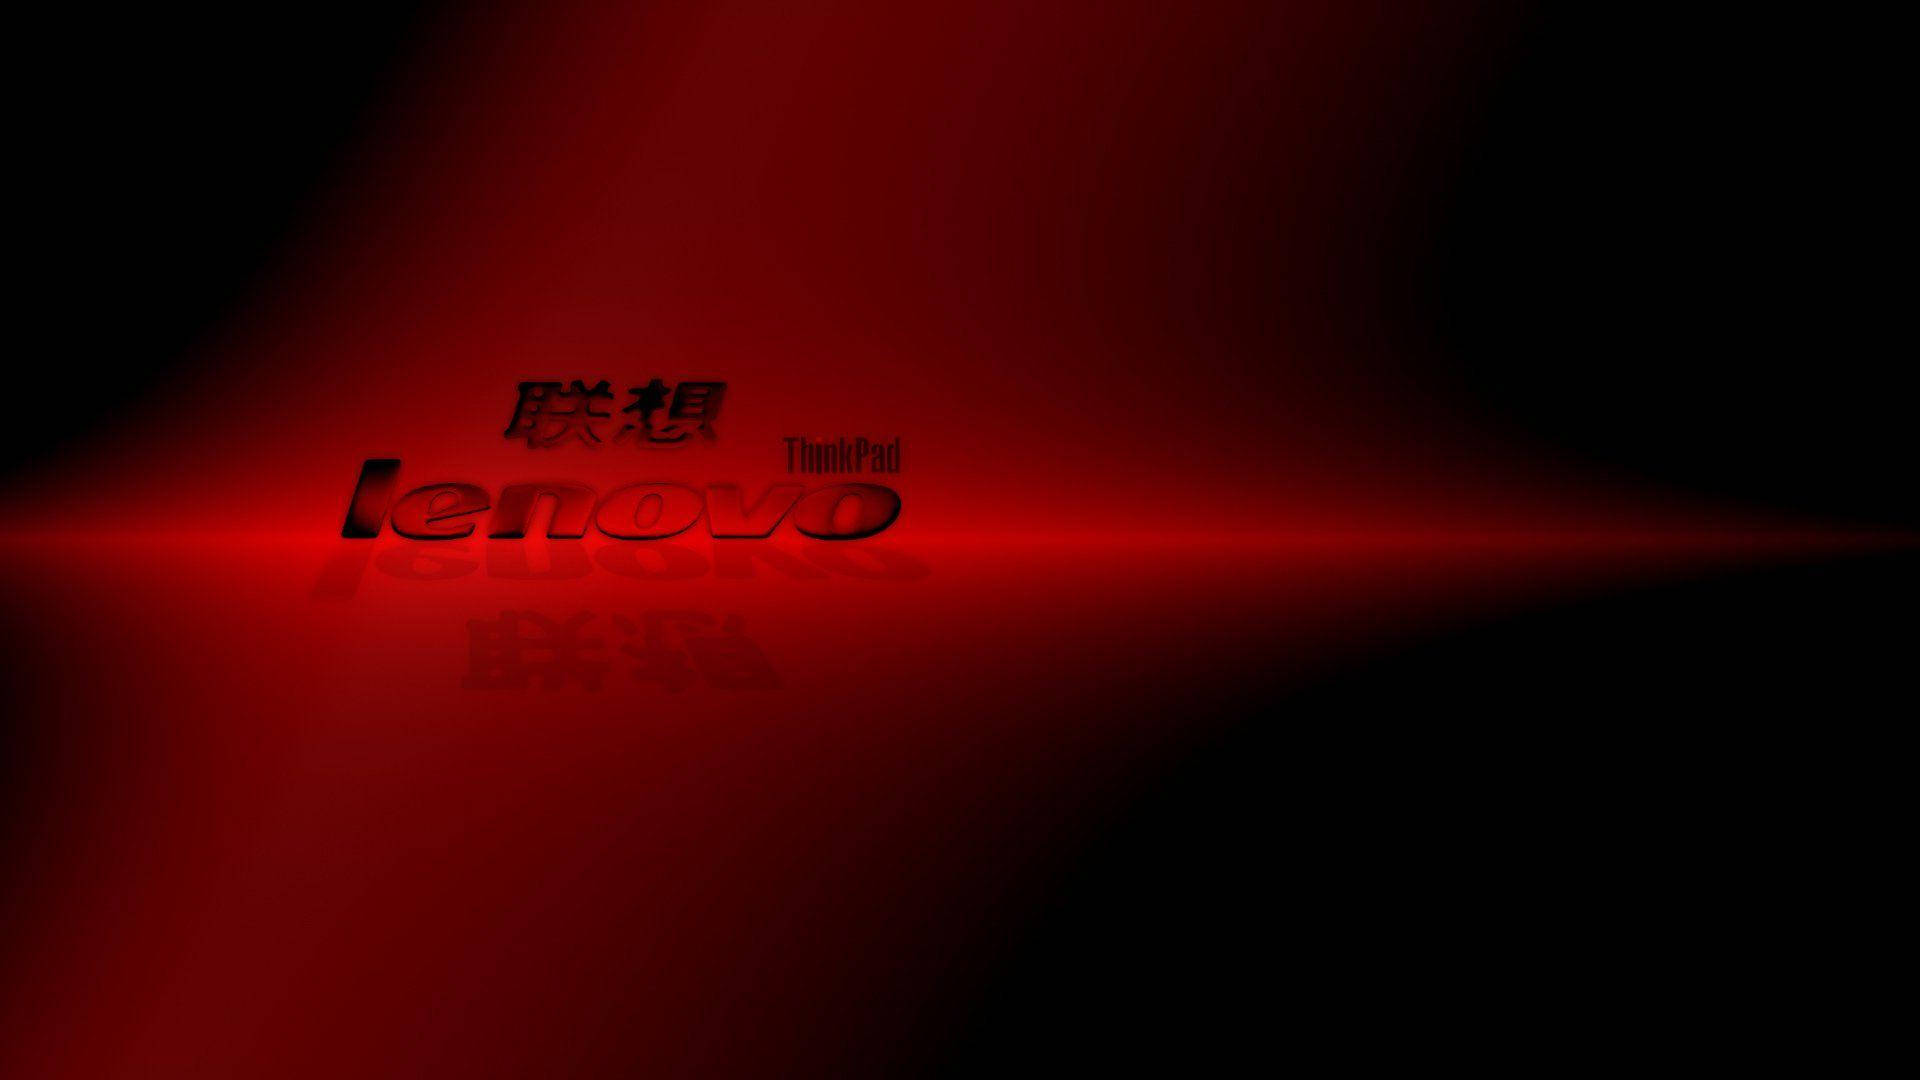 Caption: Elegant Red and Black Lenovo HD Wallpaper Wallpaper